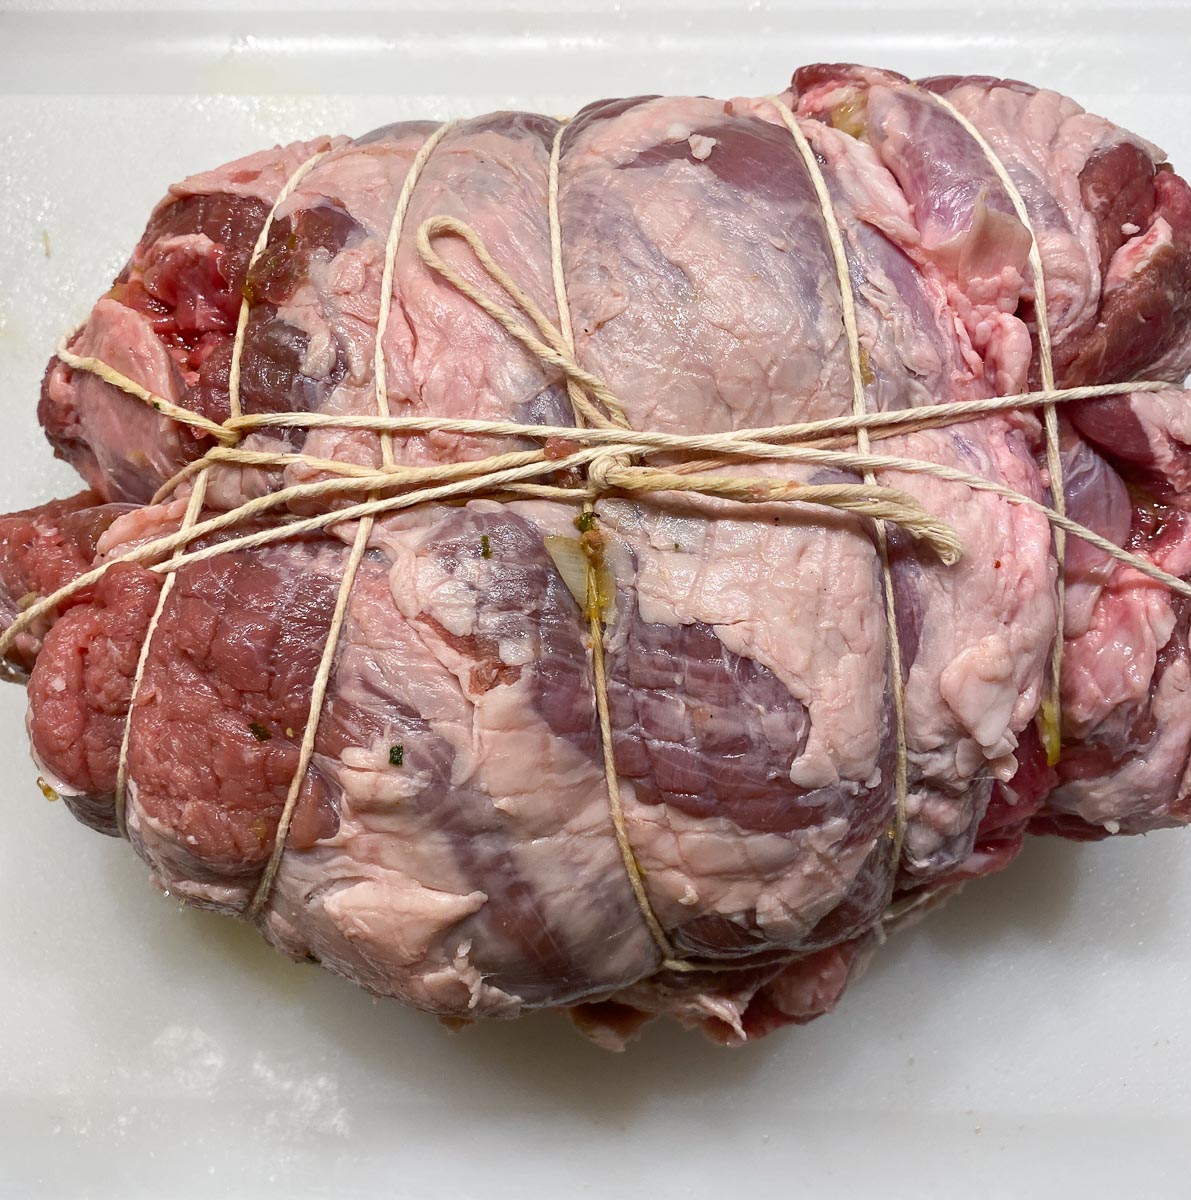 Boneless leg of lamb, tied with Butcher twine